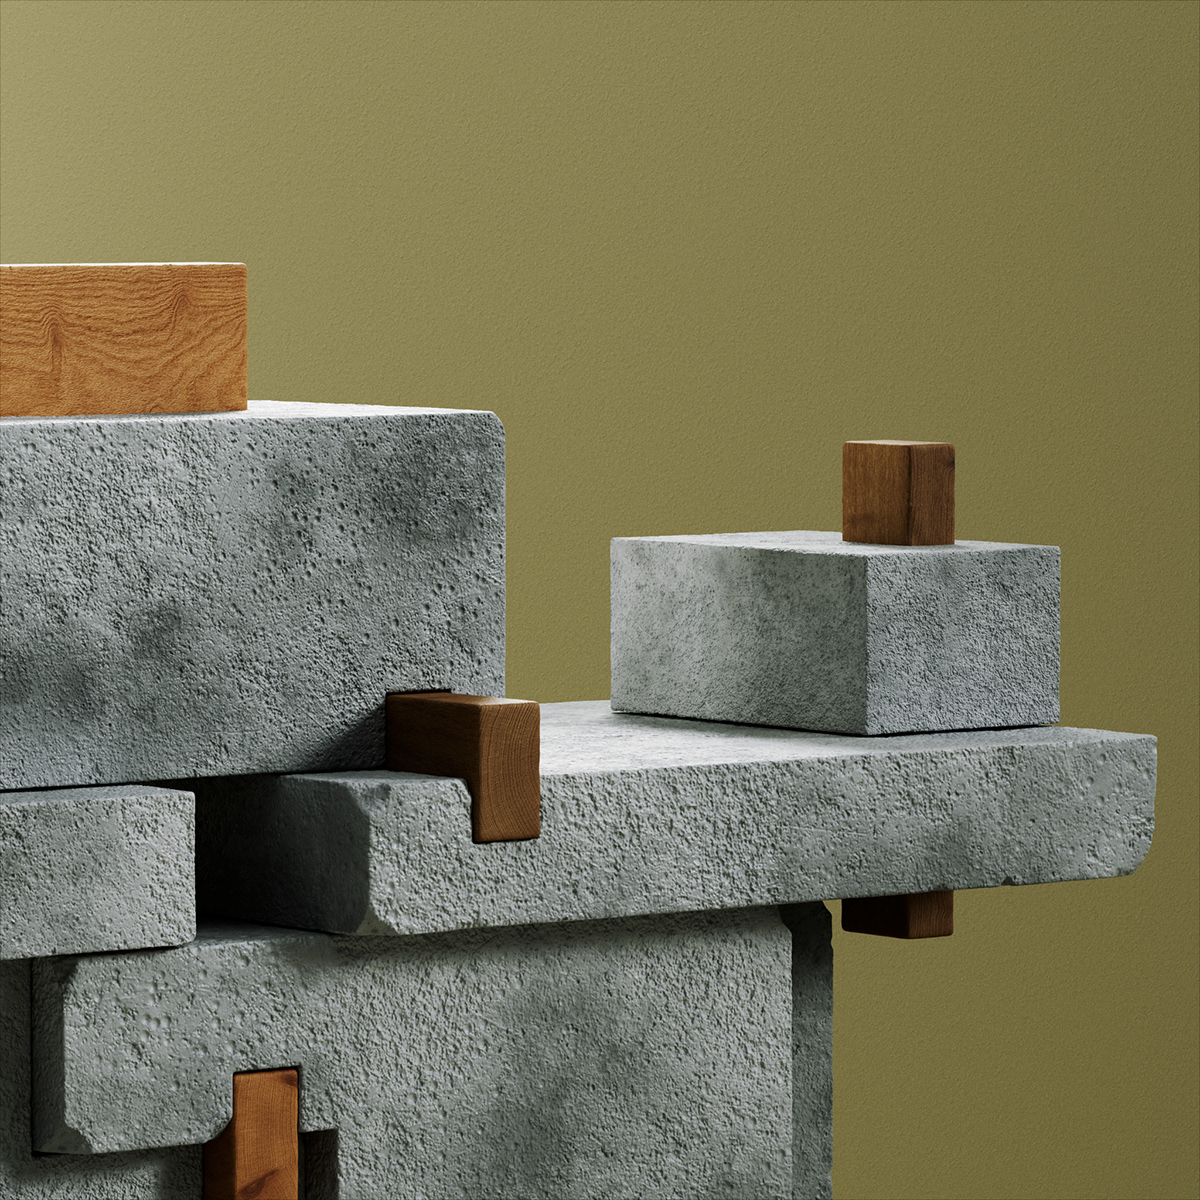 3D Brutalism clean concrete minimal Minimalism modern sculpture simple wood